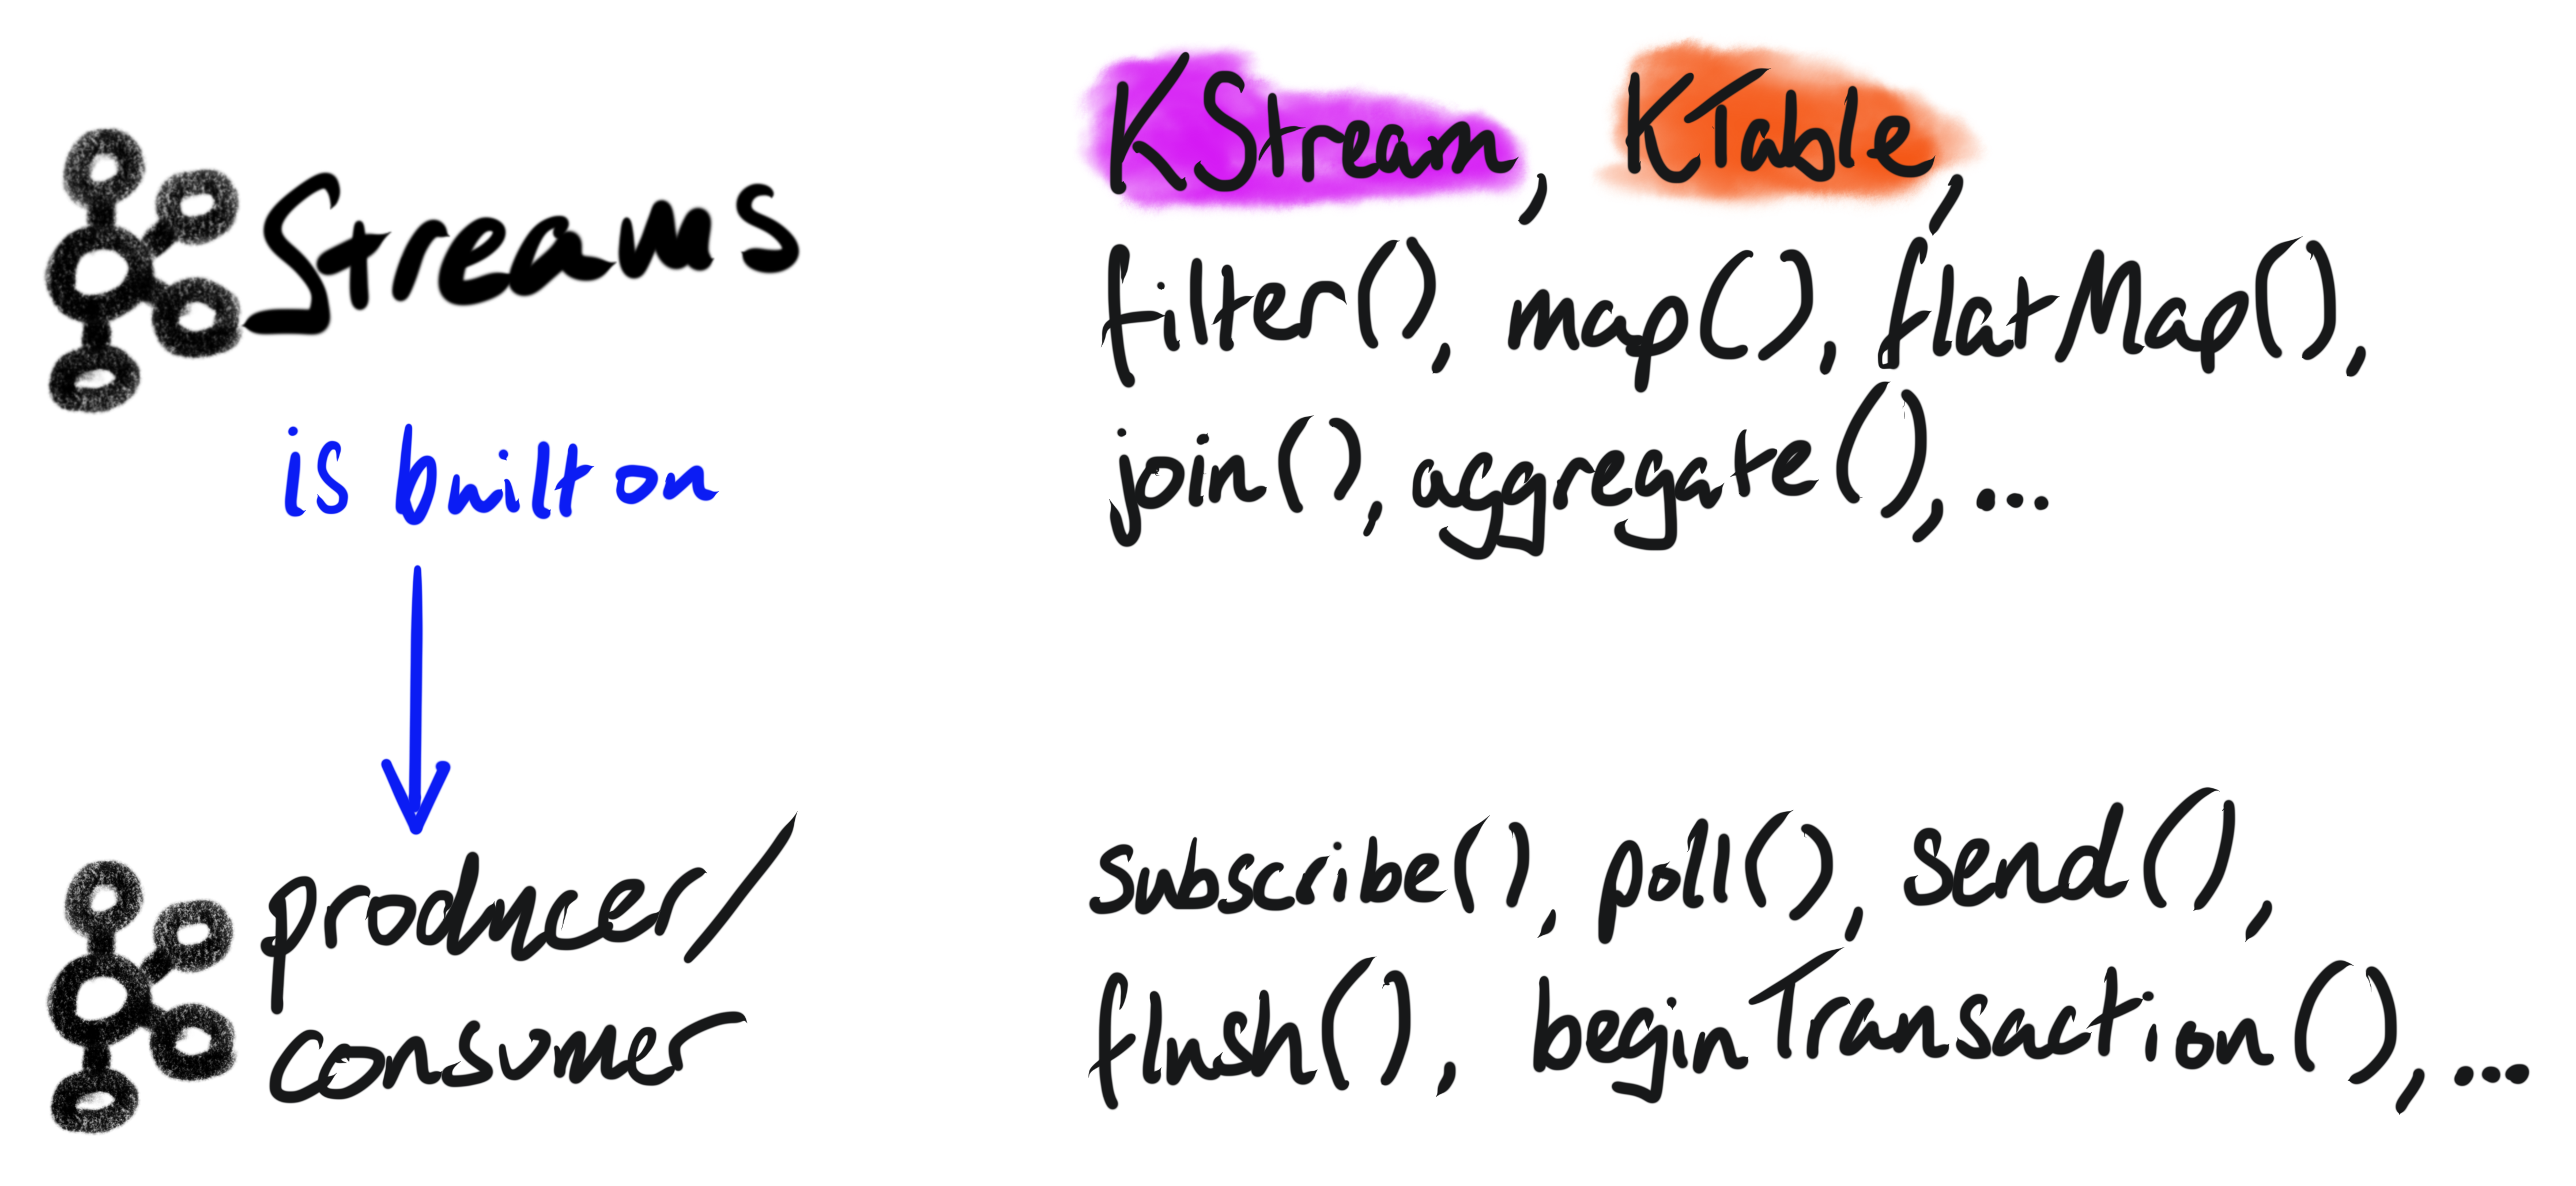 Kafka Streams built on the producer/consumer API